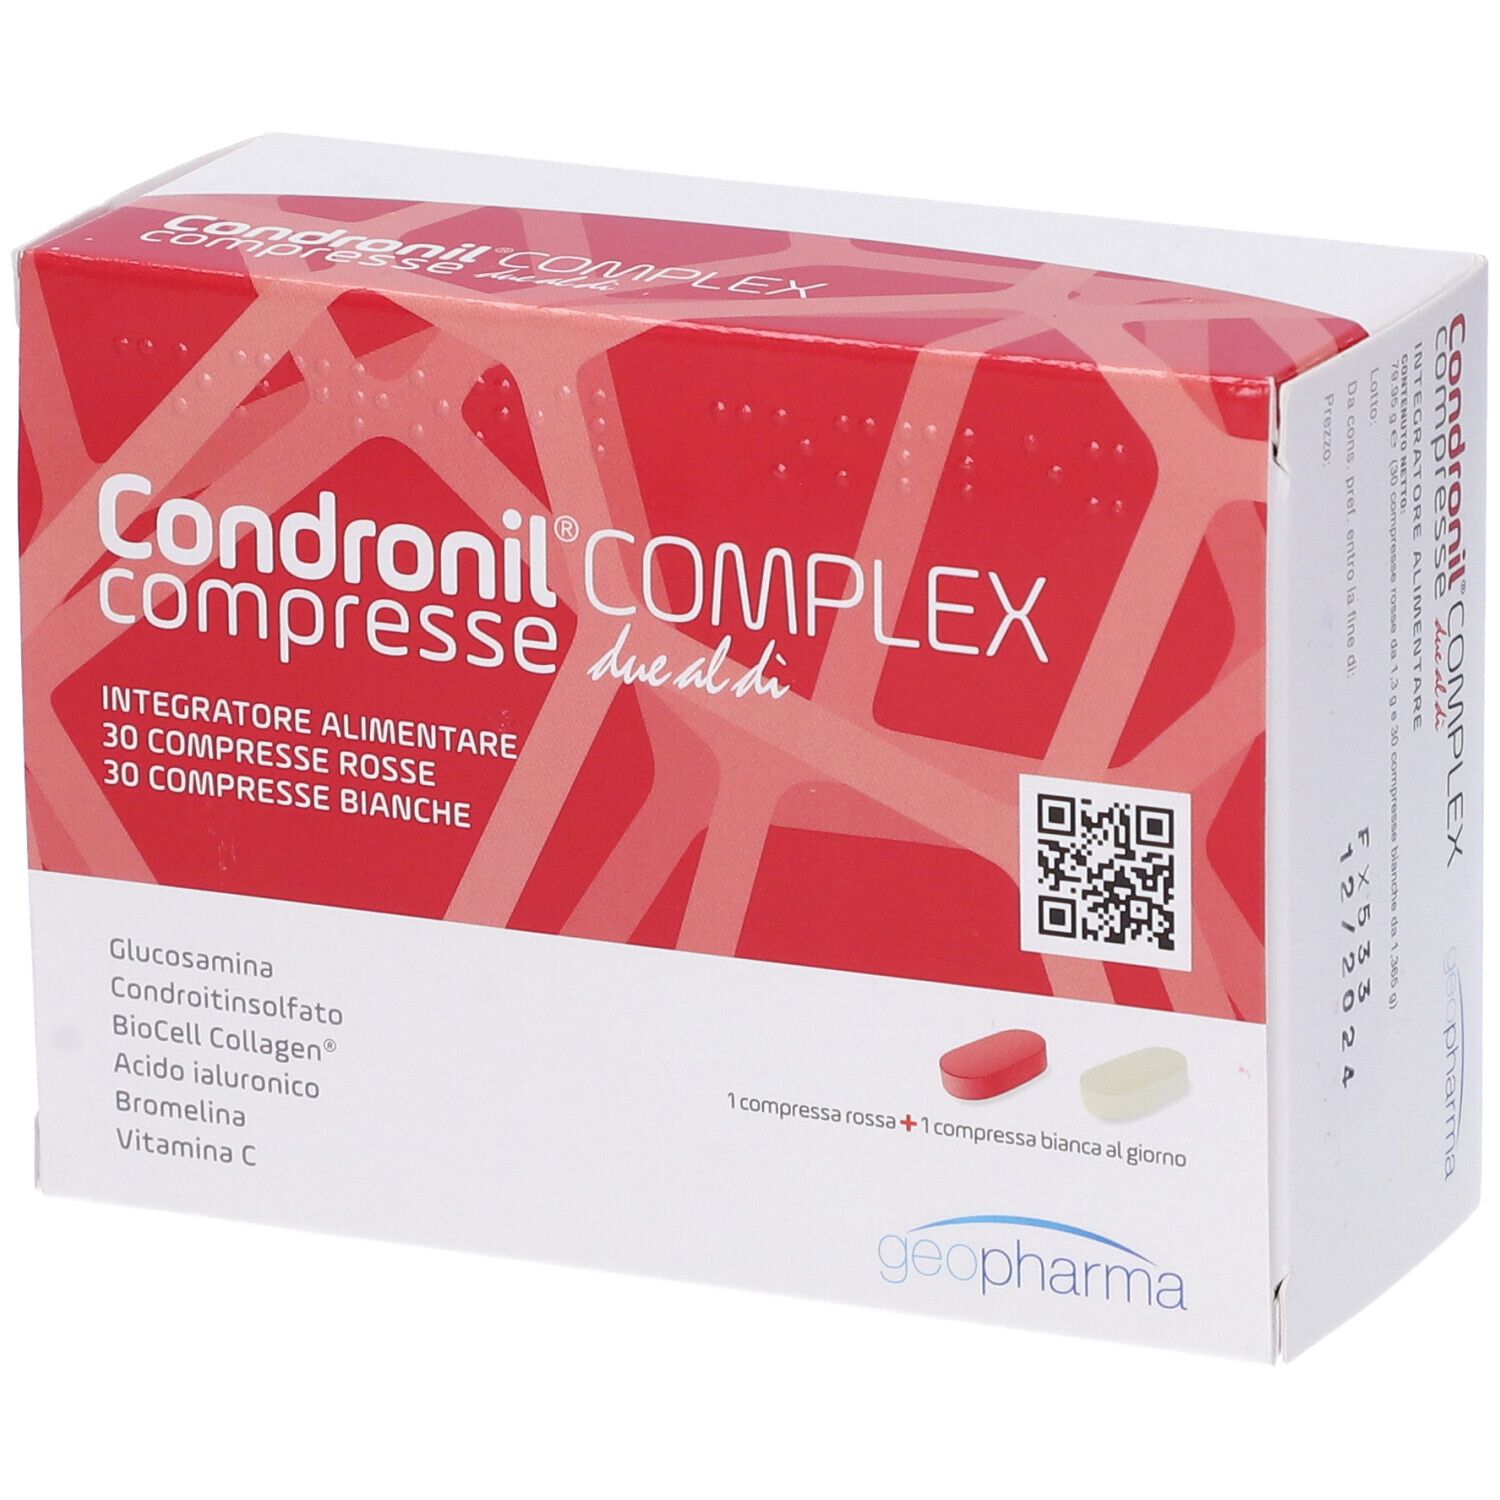 Geopharma Condronil® Complex Compresse